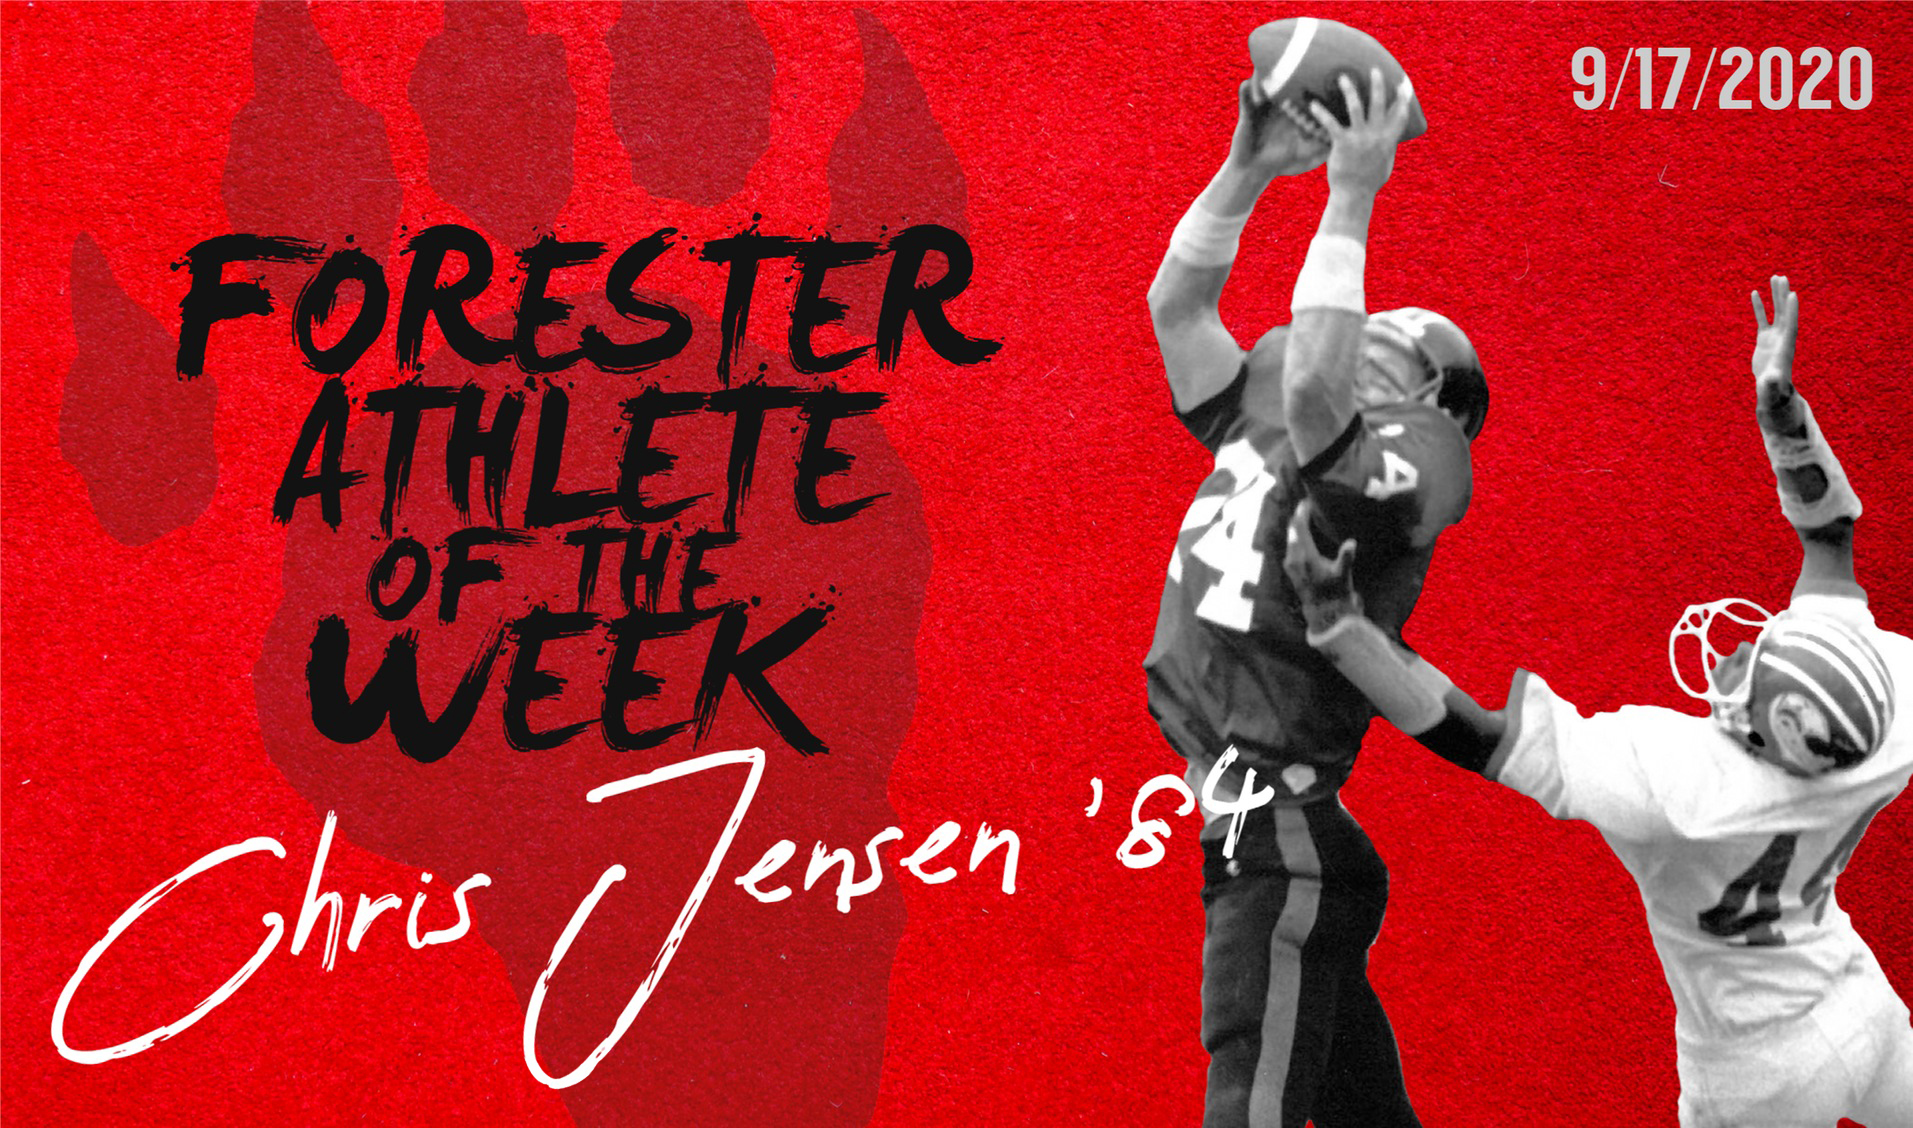 Chris Jensen '84 Named Forester Athlete of the Week